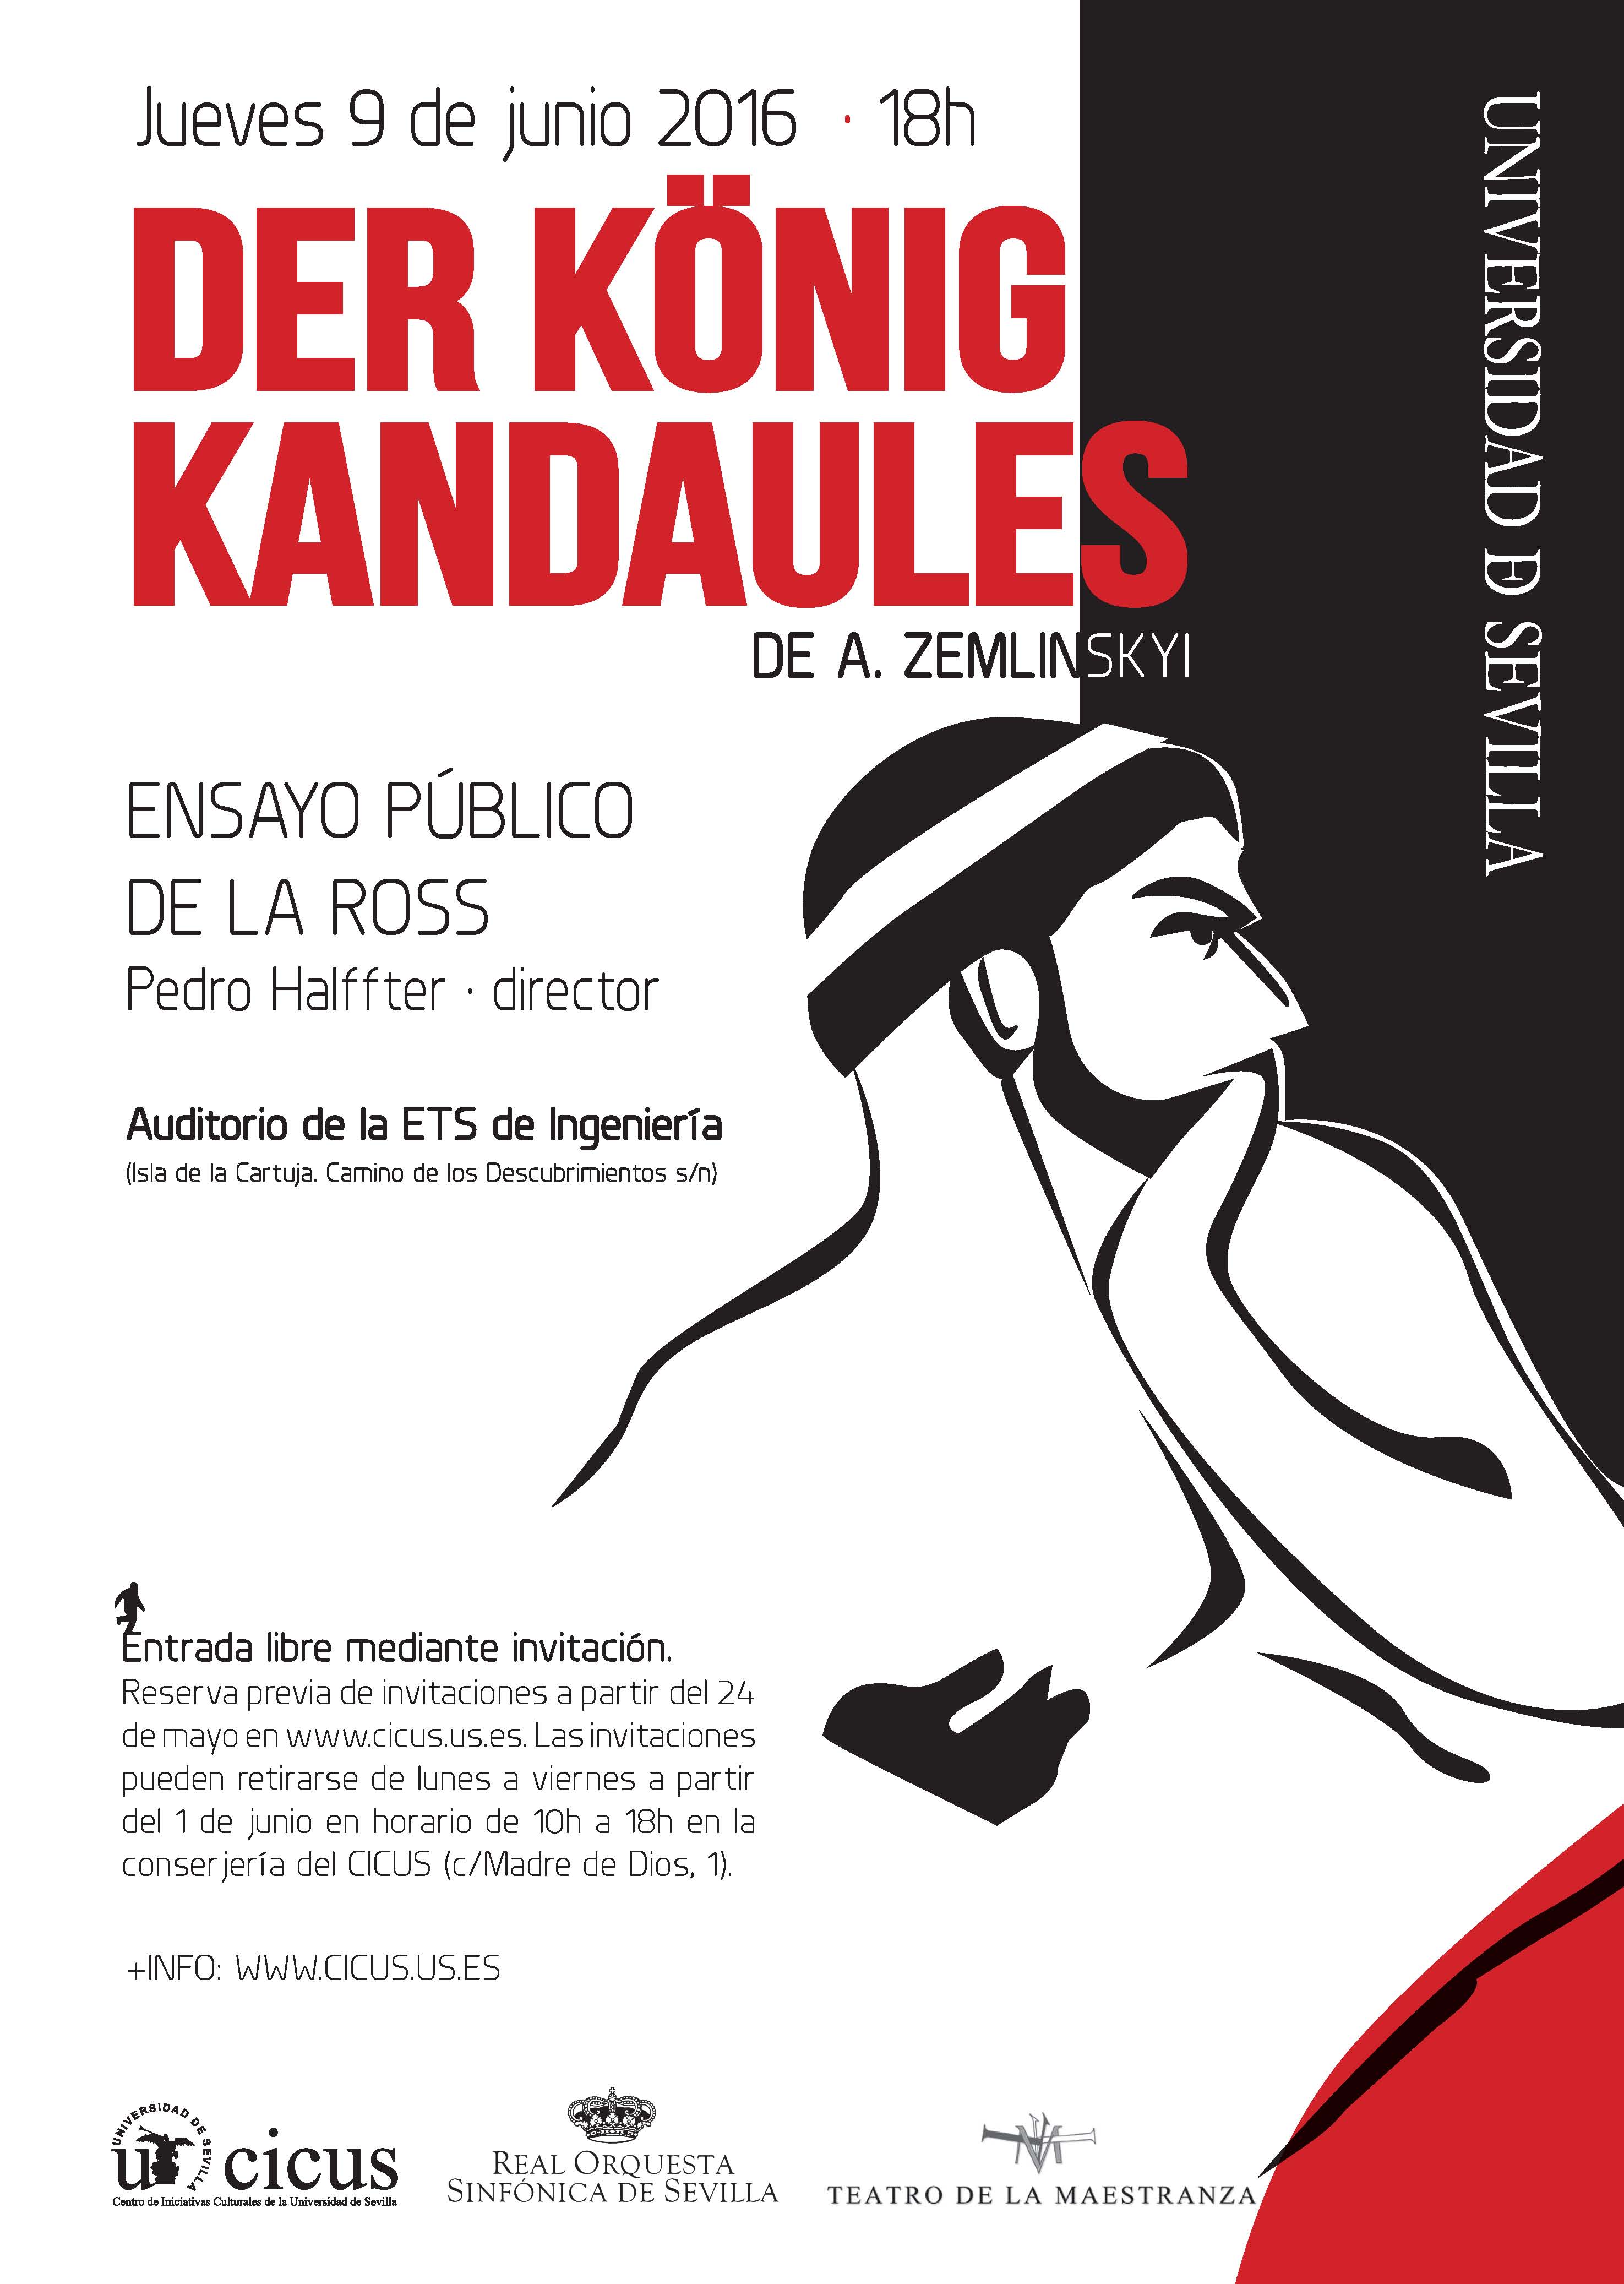 cartel Kandeules